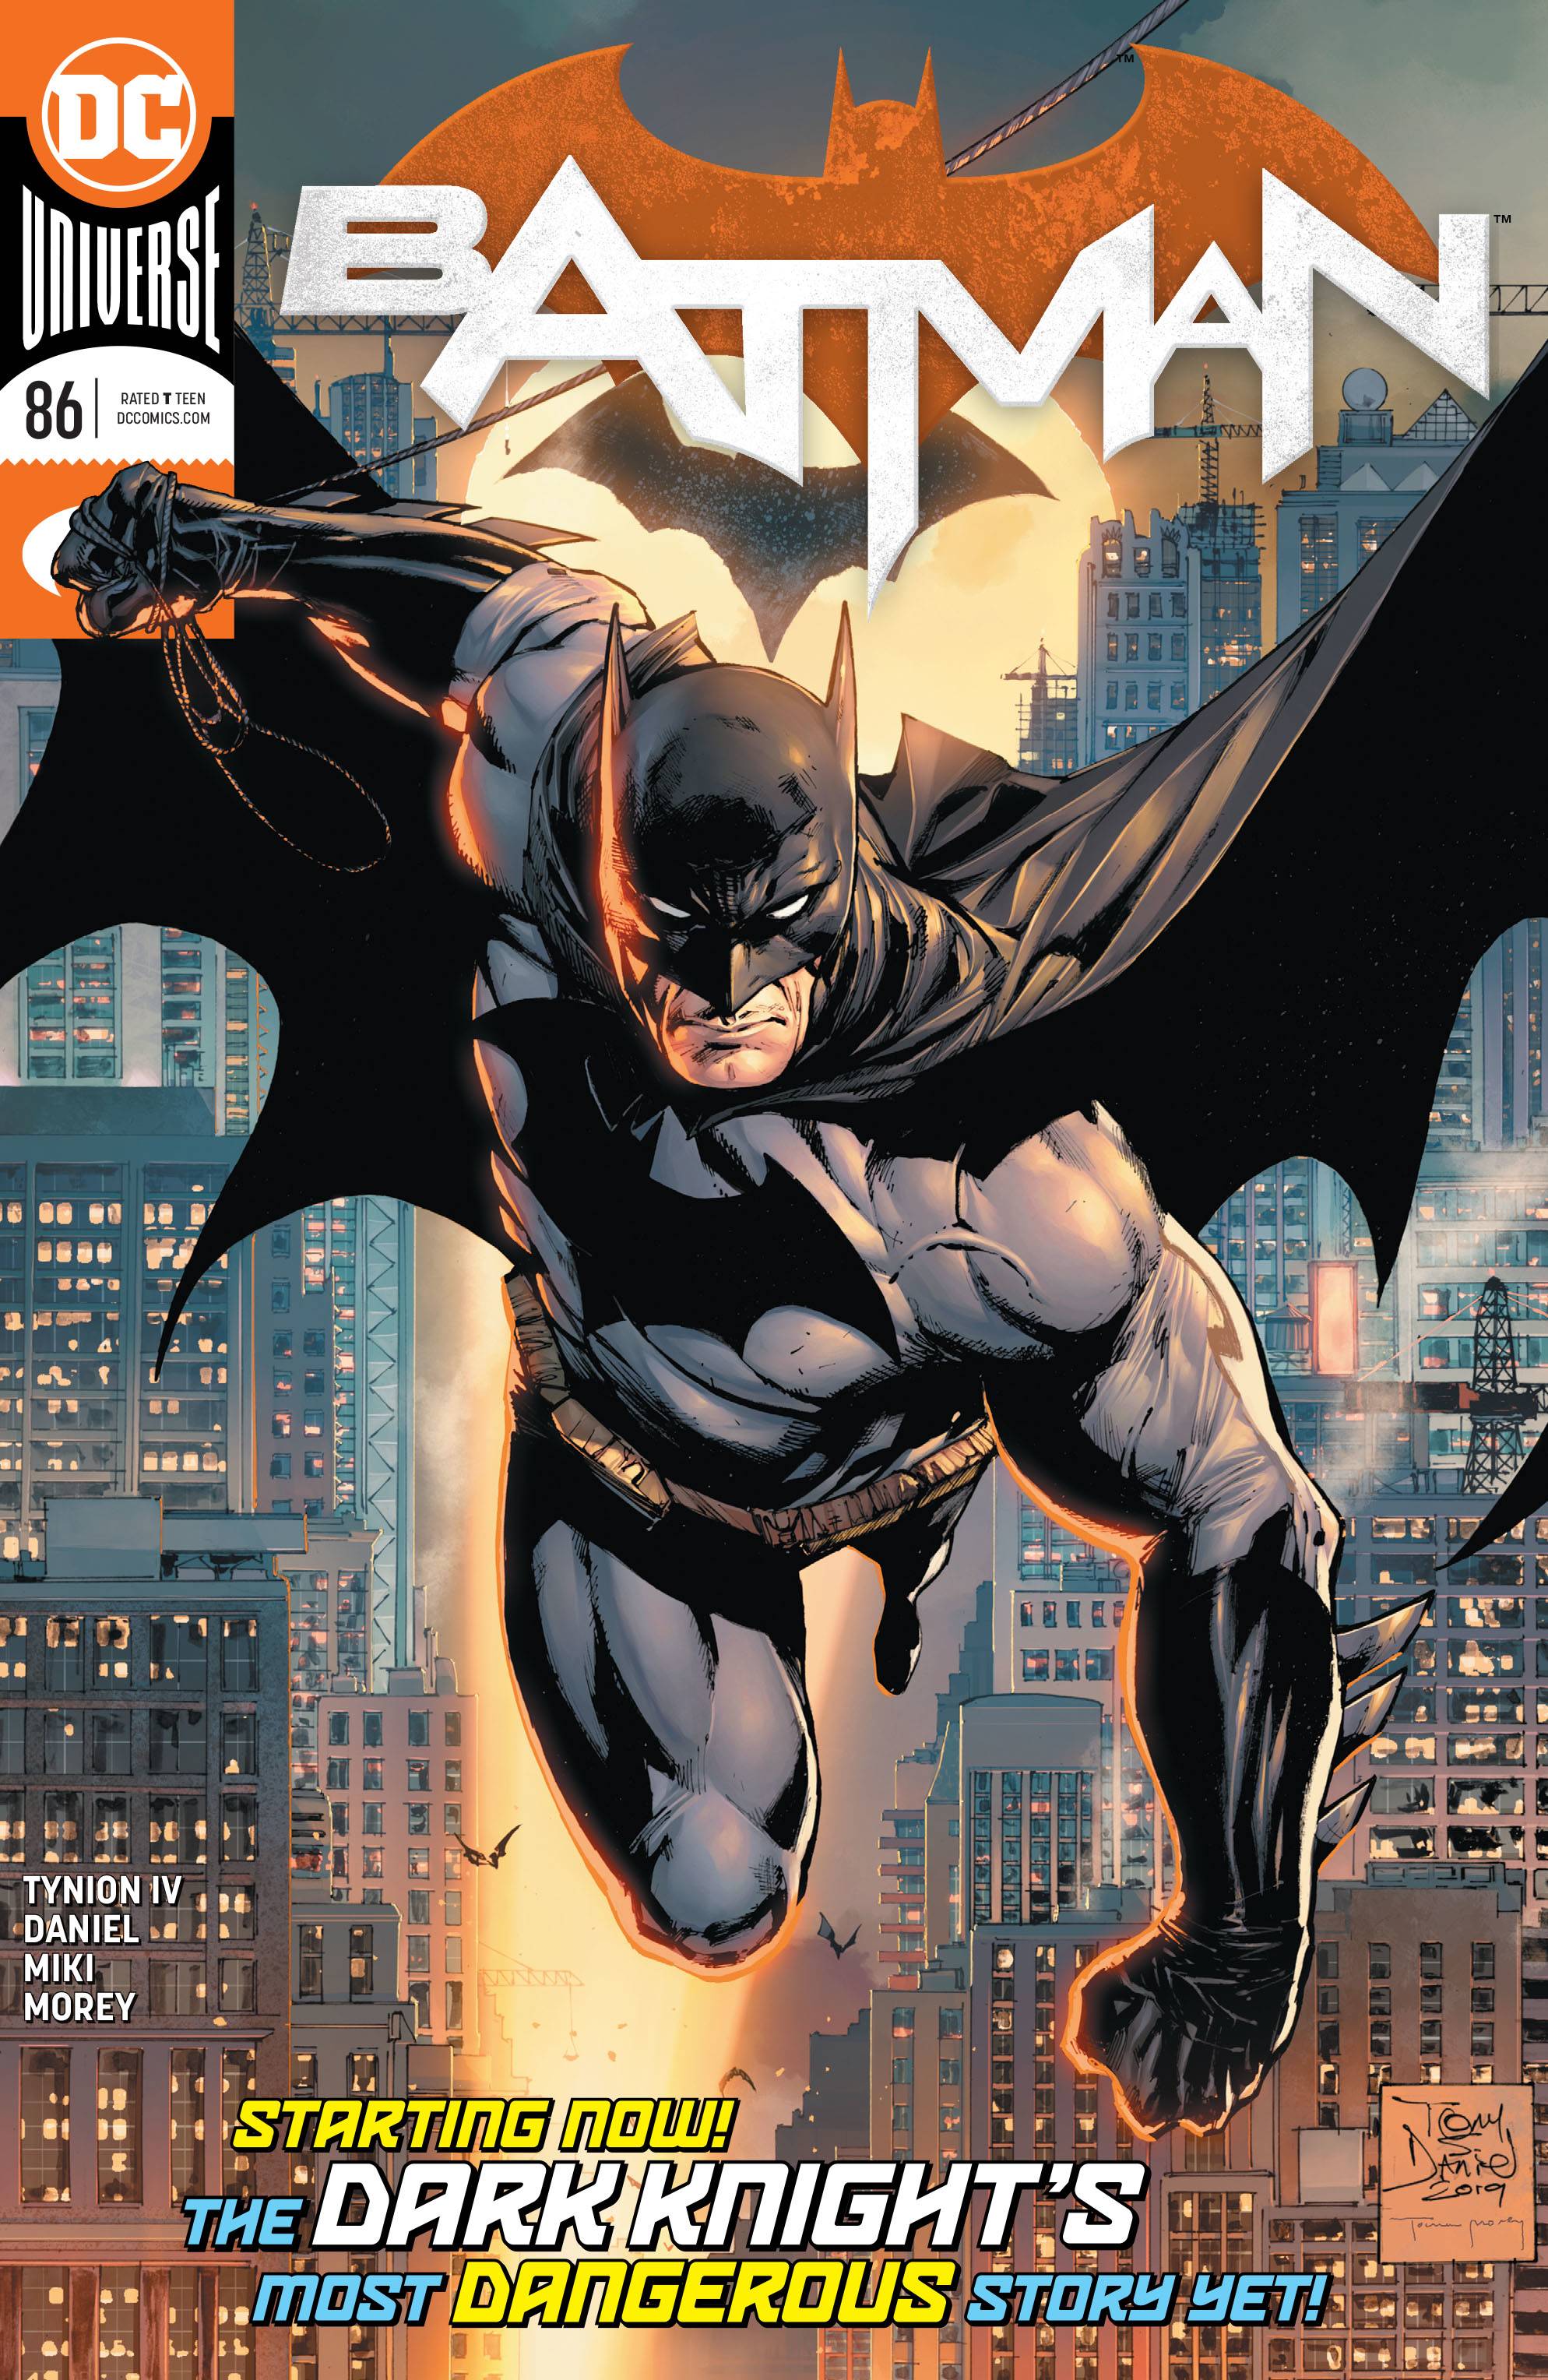 NOV190411 - BATMAN #86 - Free Comic Book Day